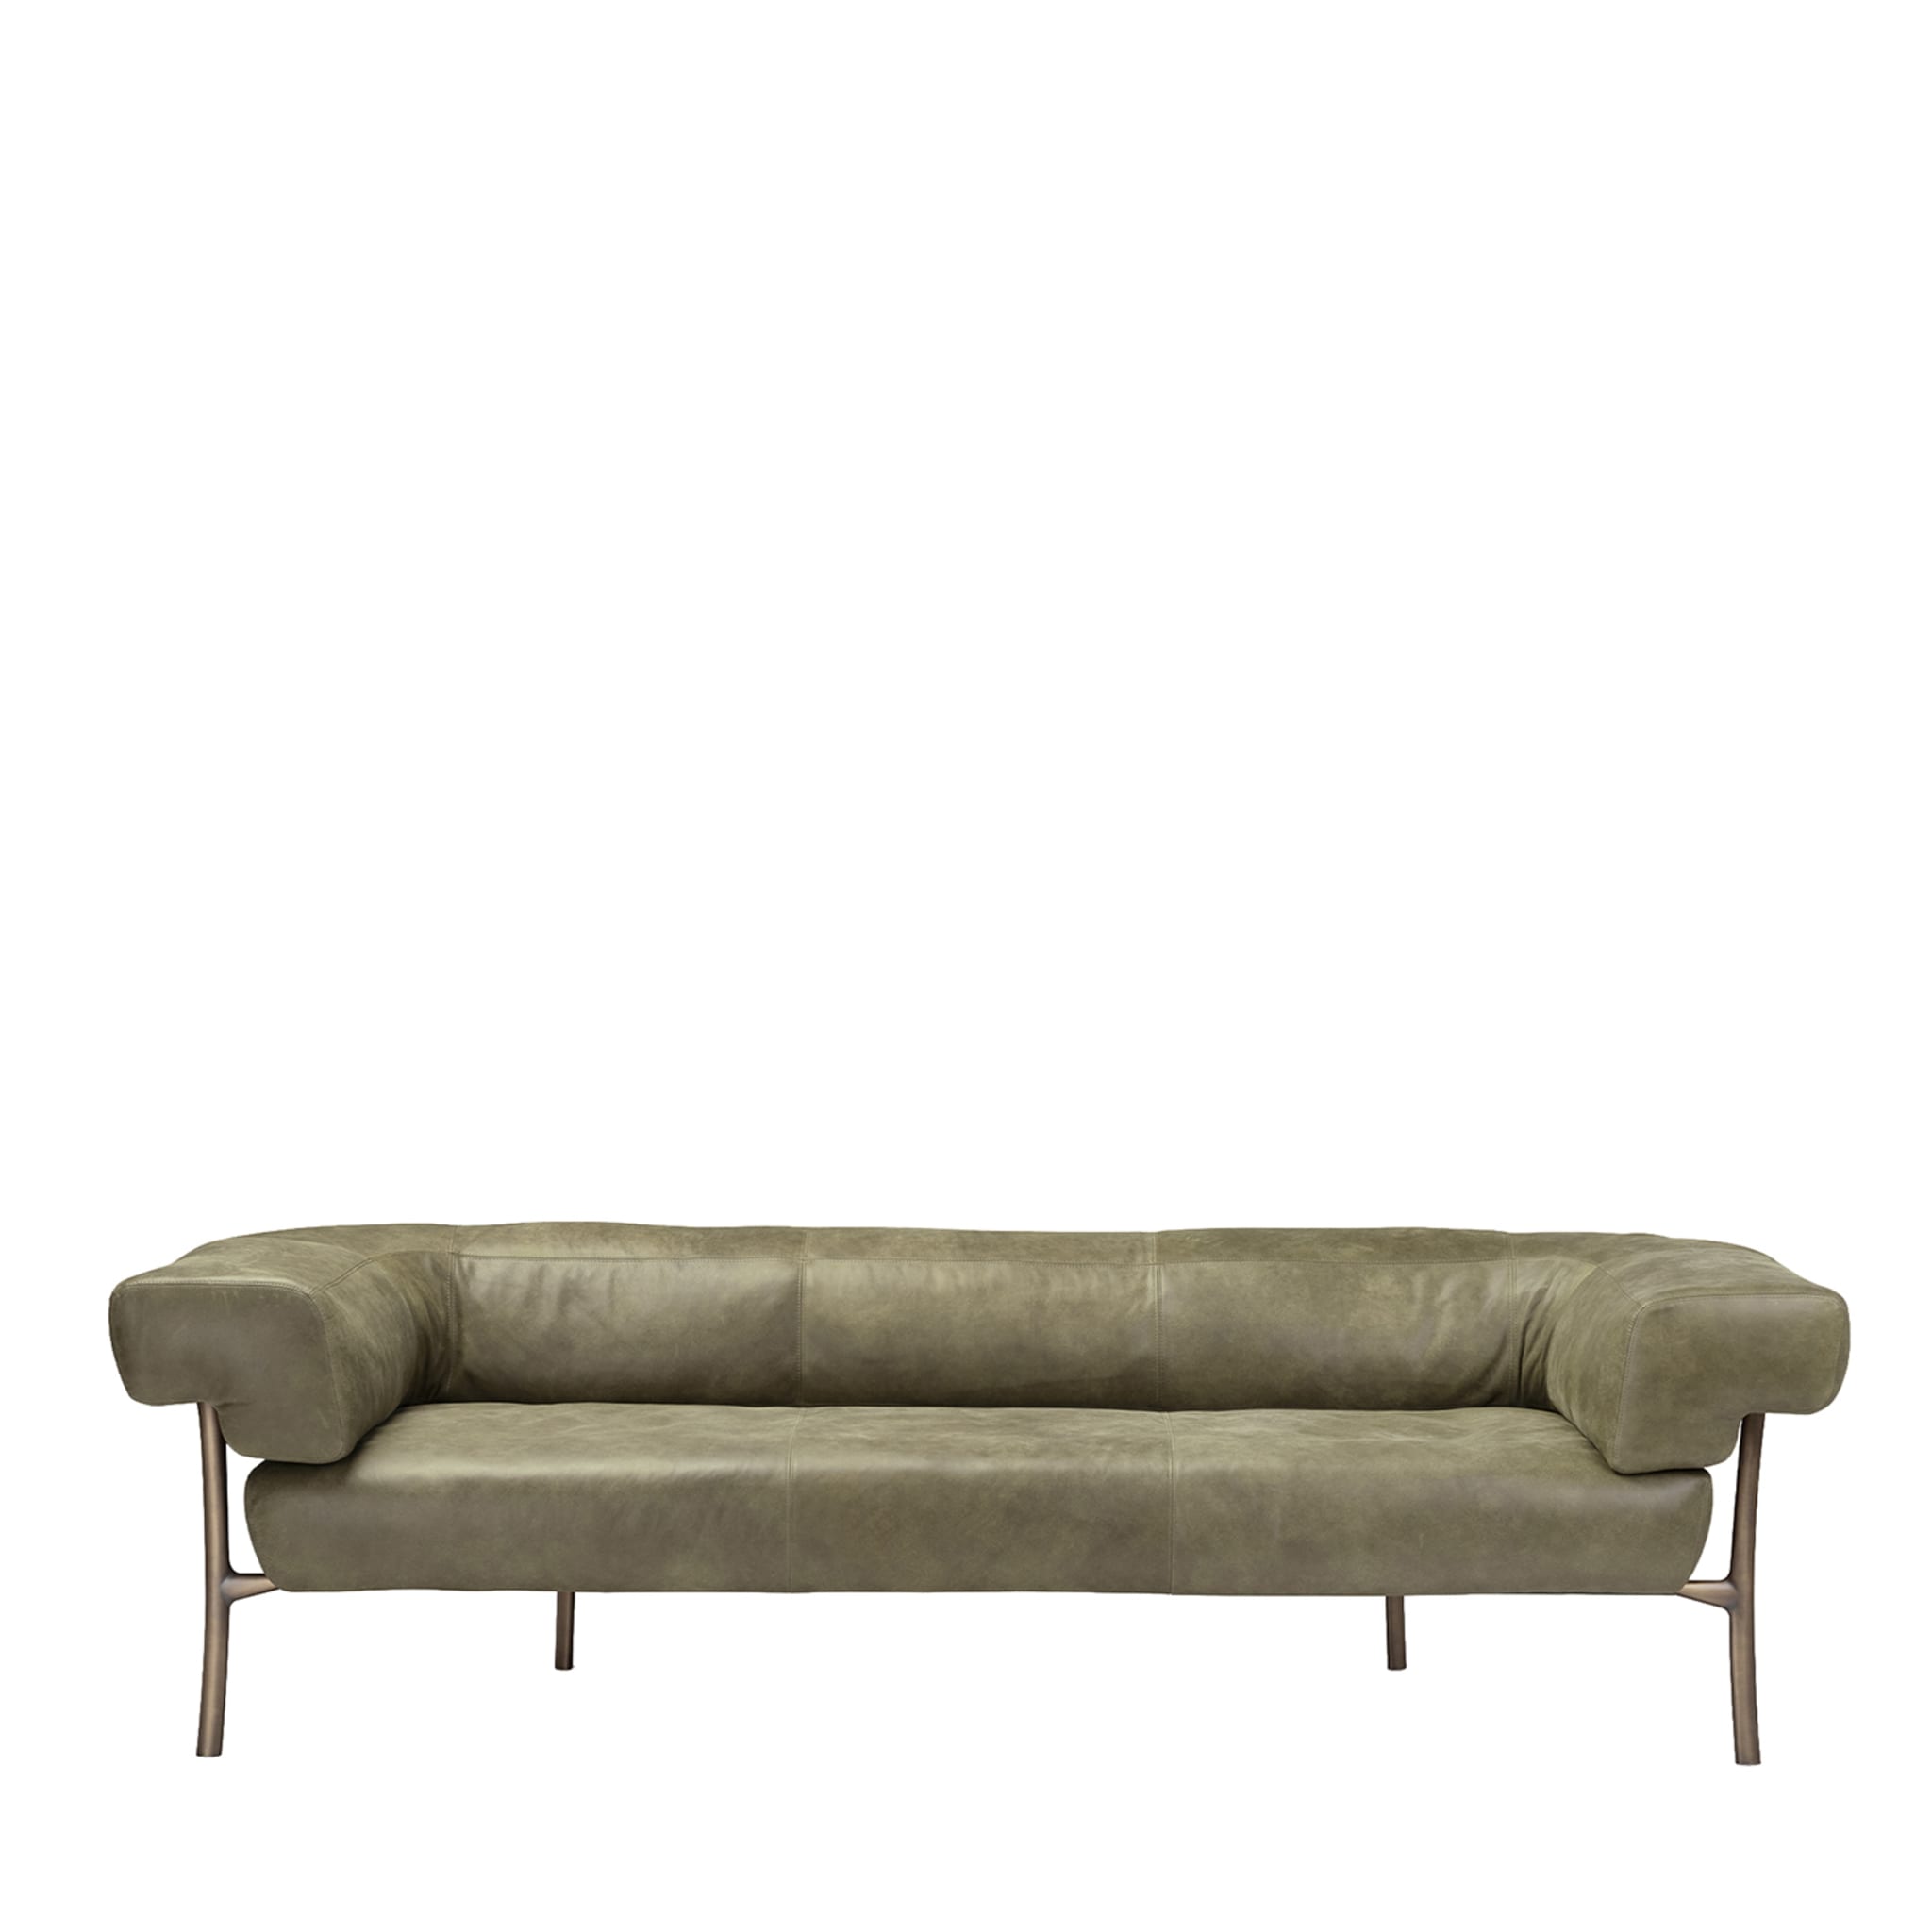 Katana Gray Leather Sofa by Paolo Rizzatto - Main view